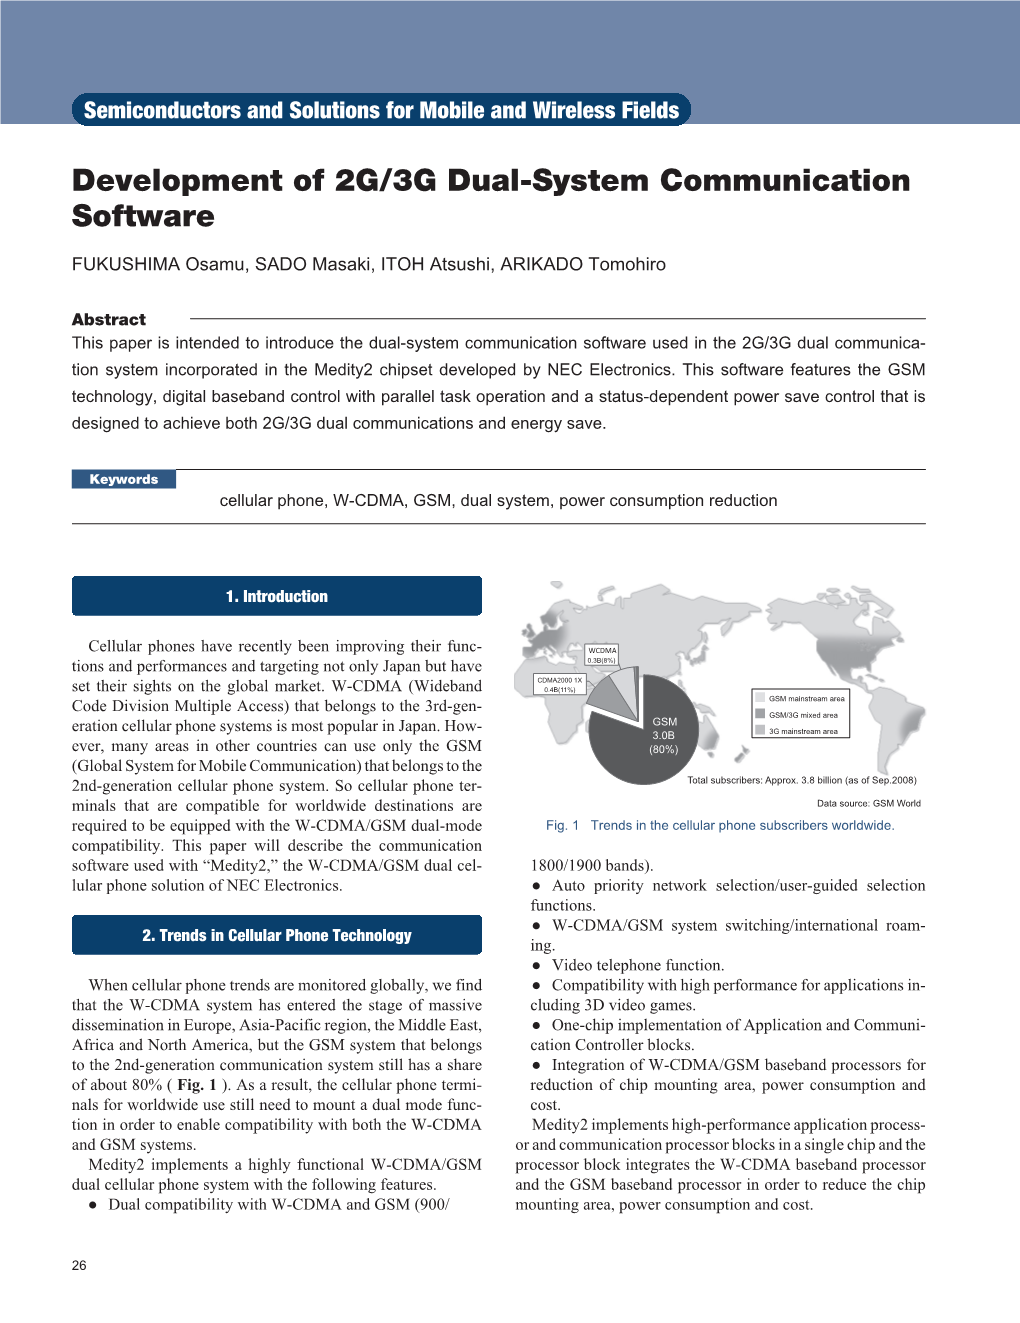 Development of 2G/3G Dual-System Communication Software